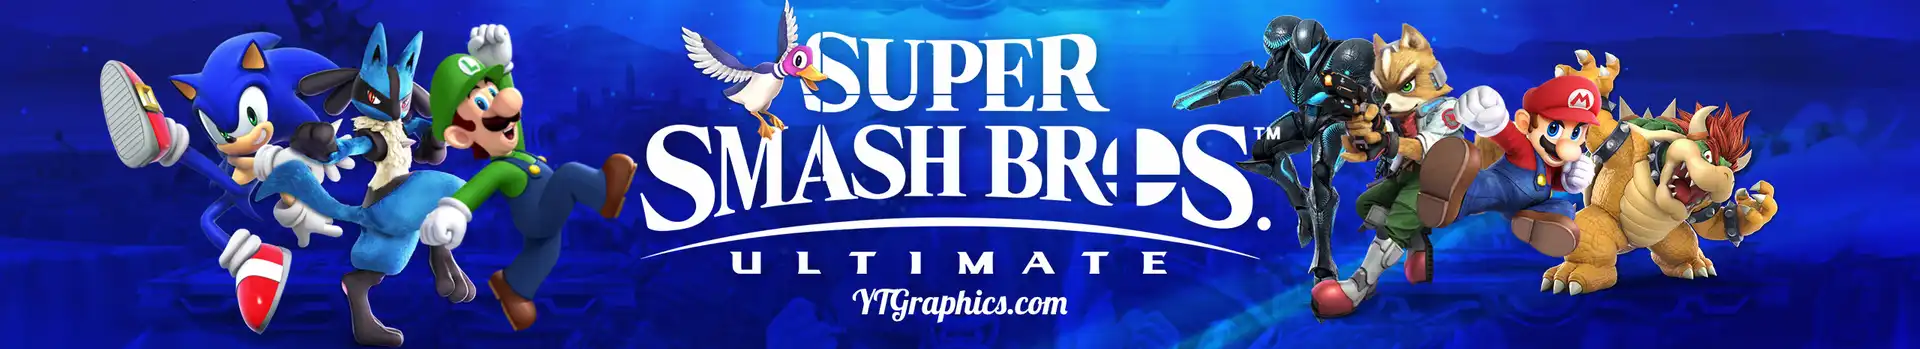 Smash Bros Ultimate preview